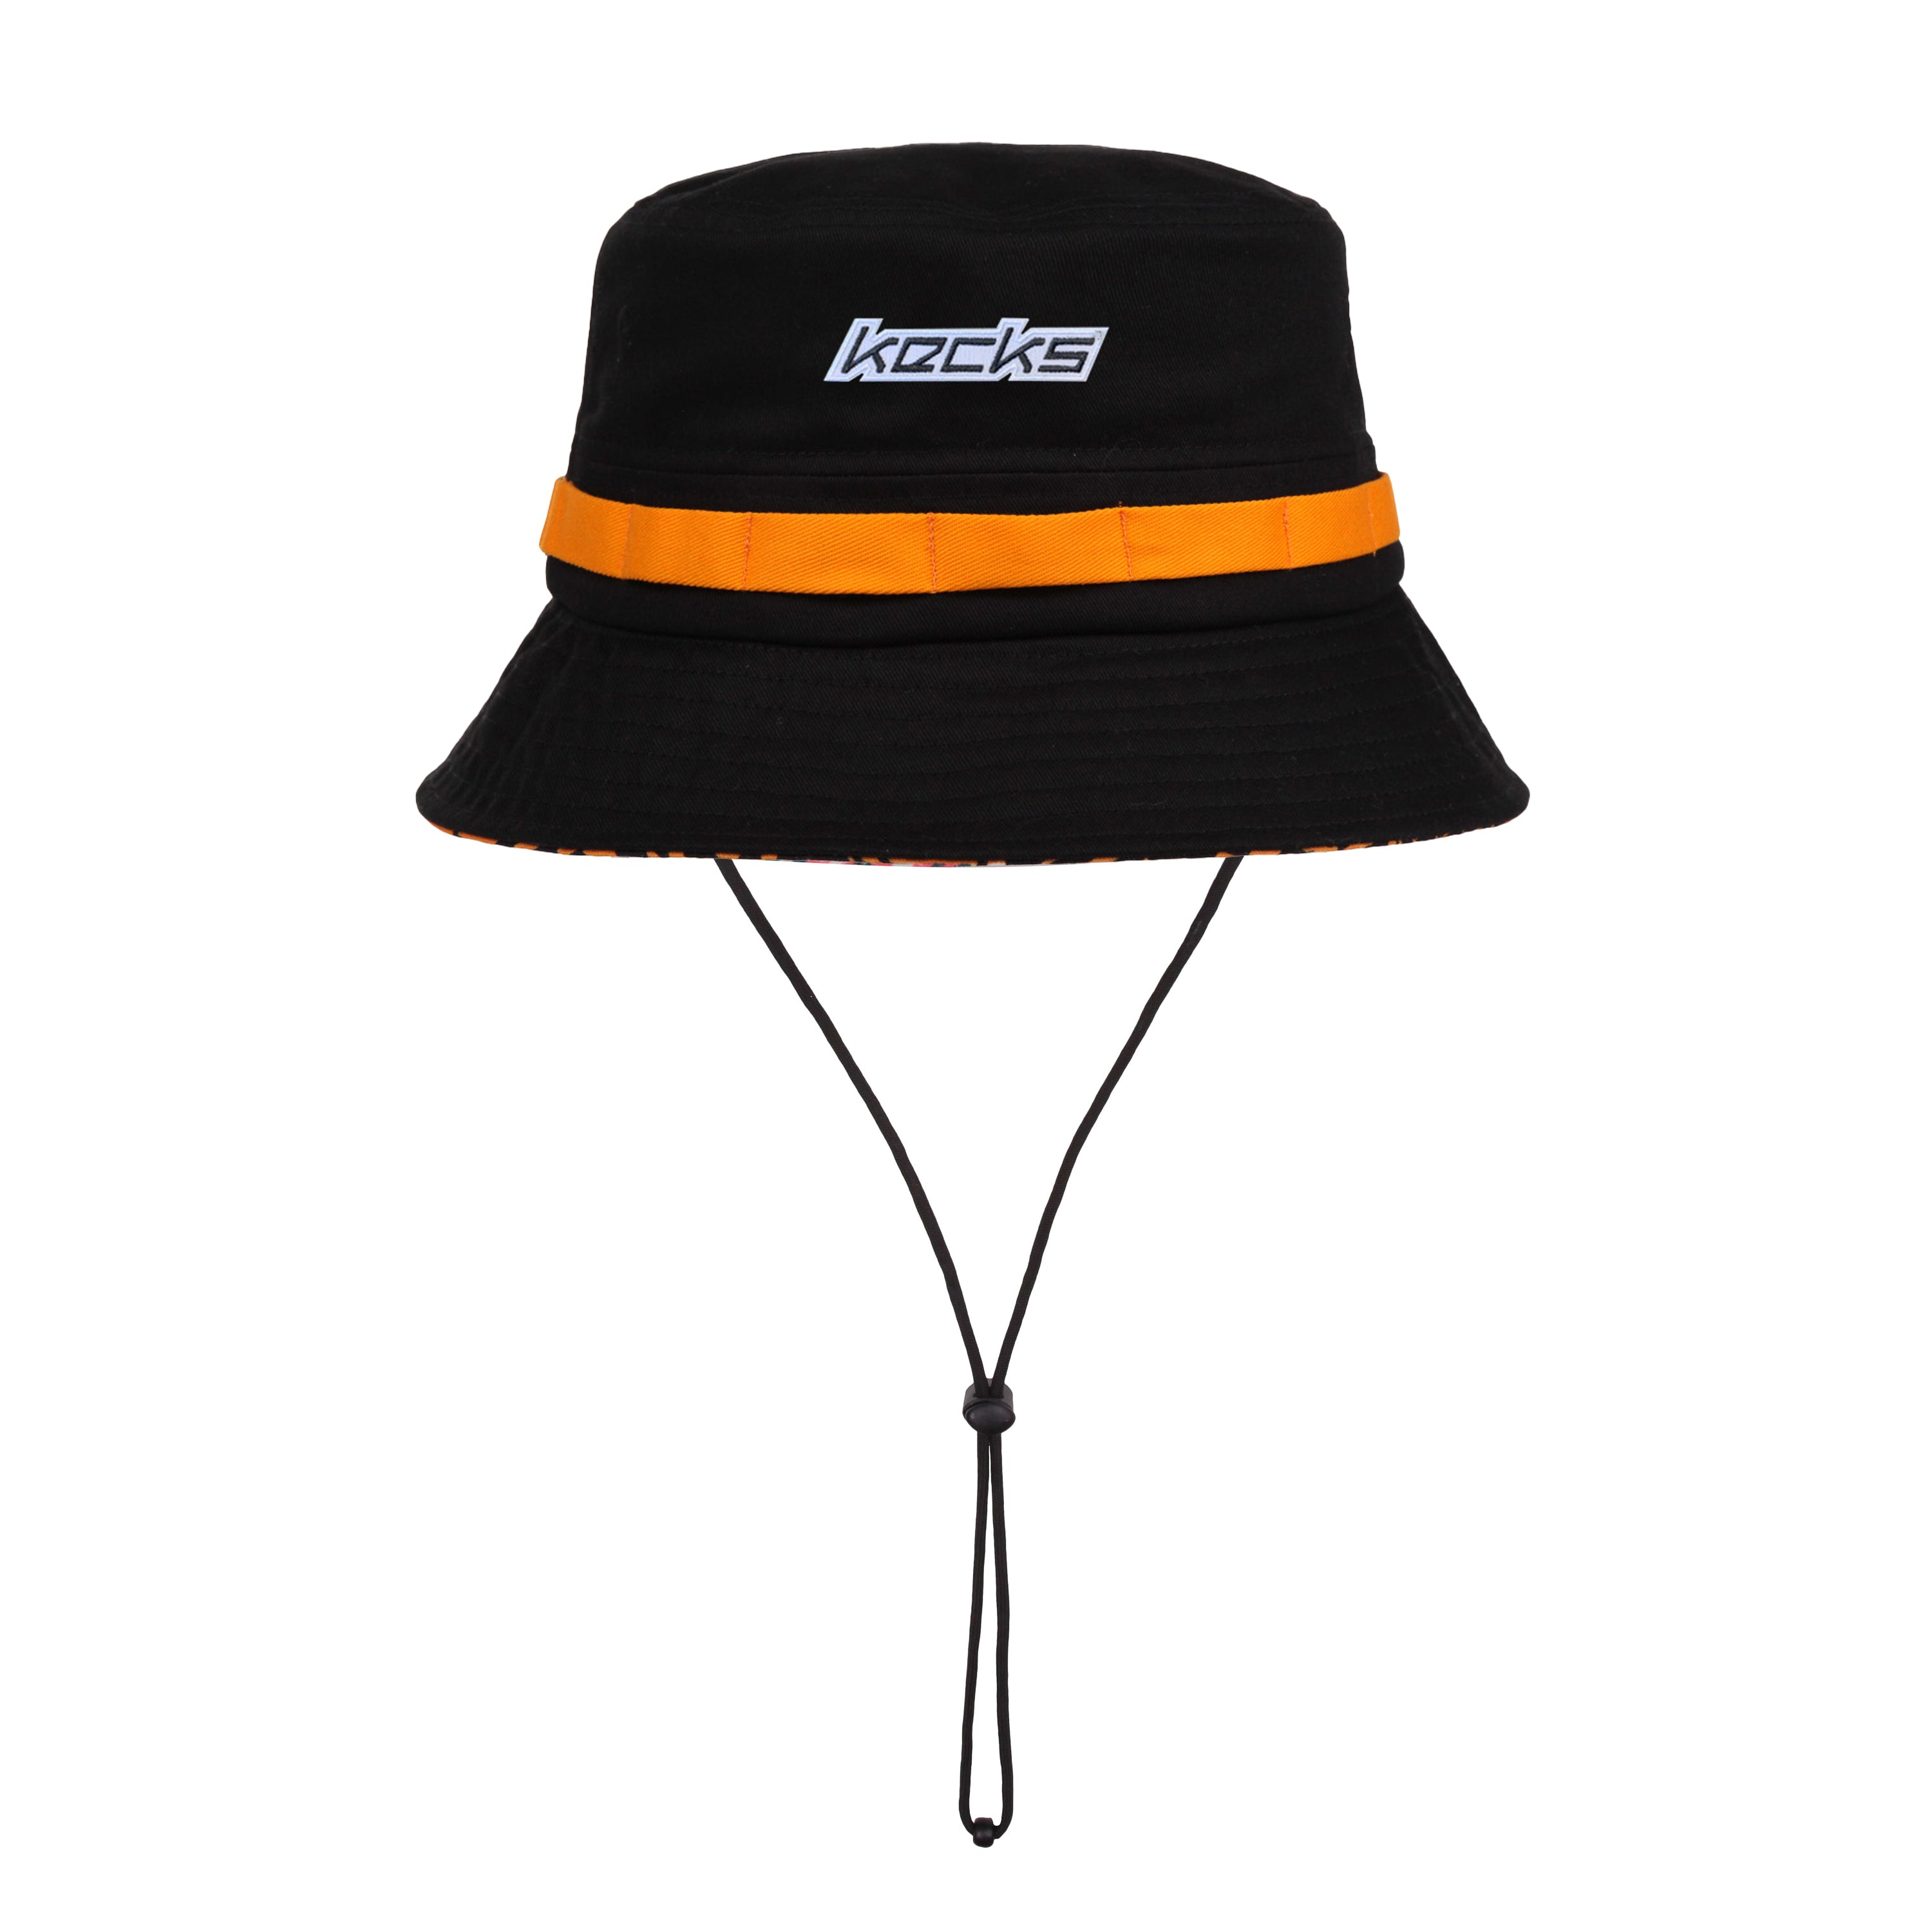 Black Kecks Bucket Hat